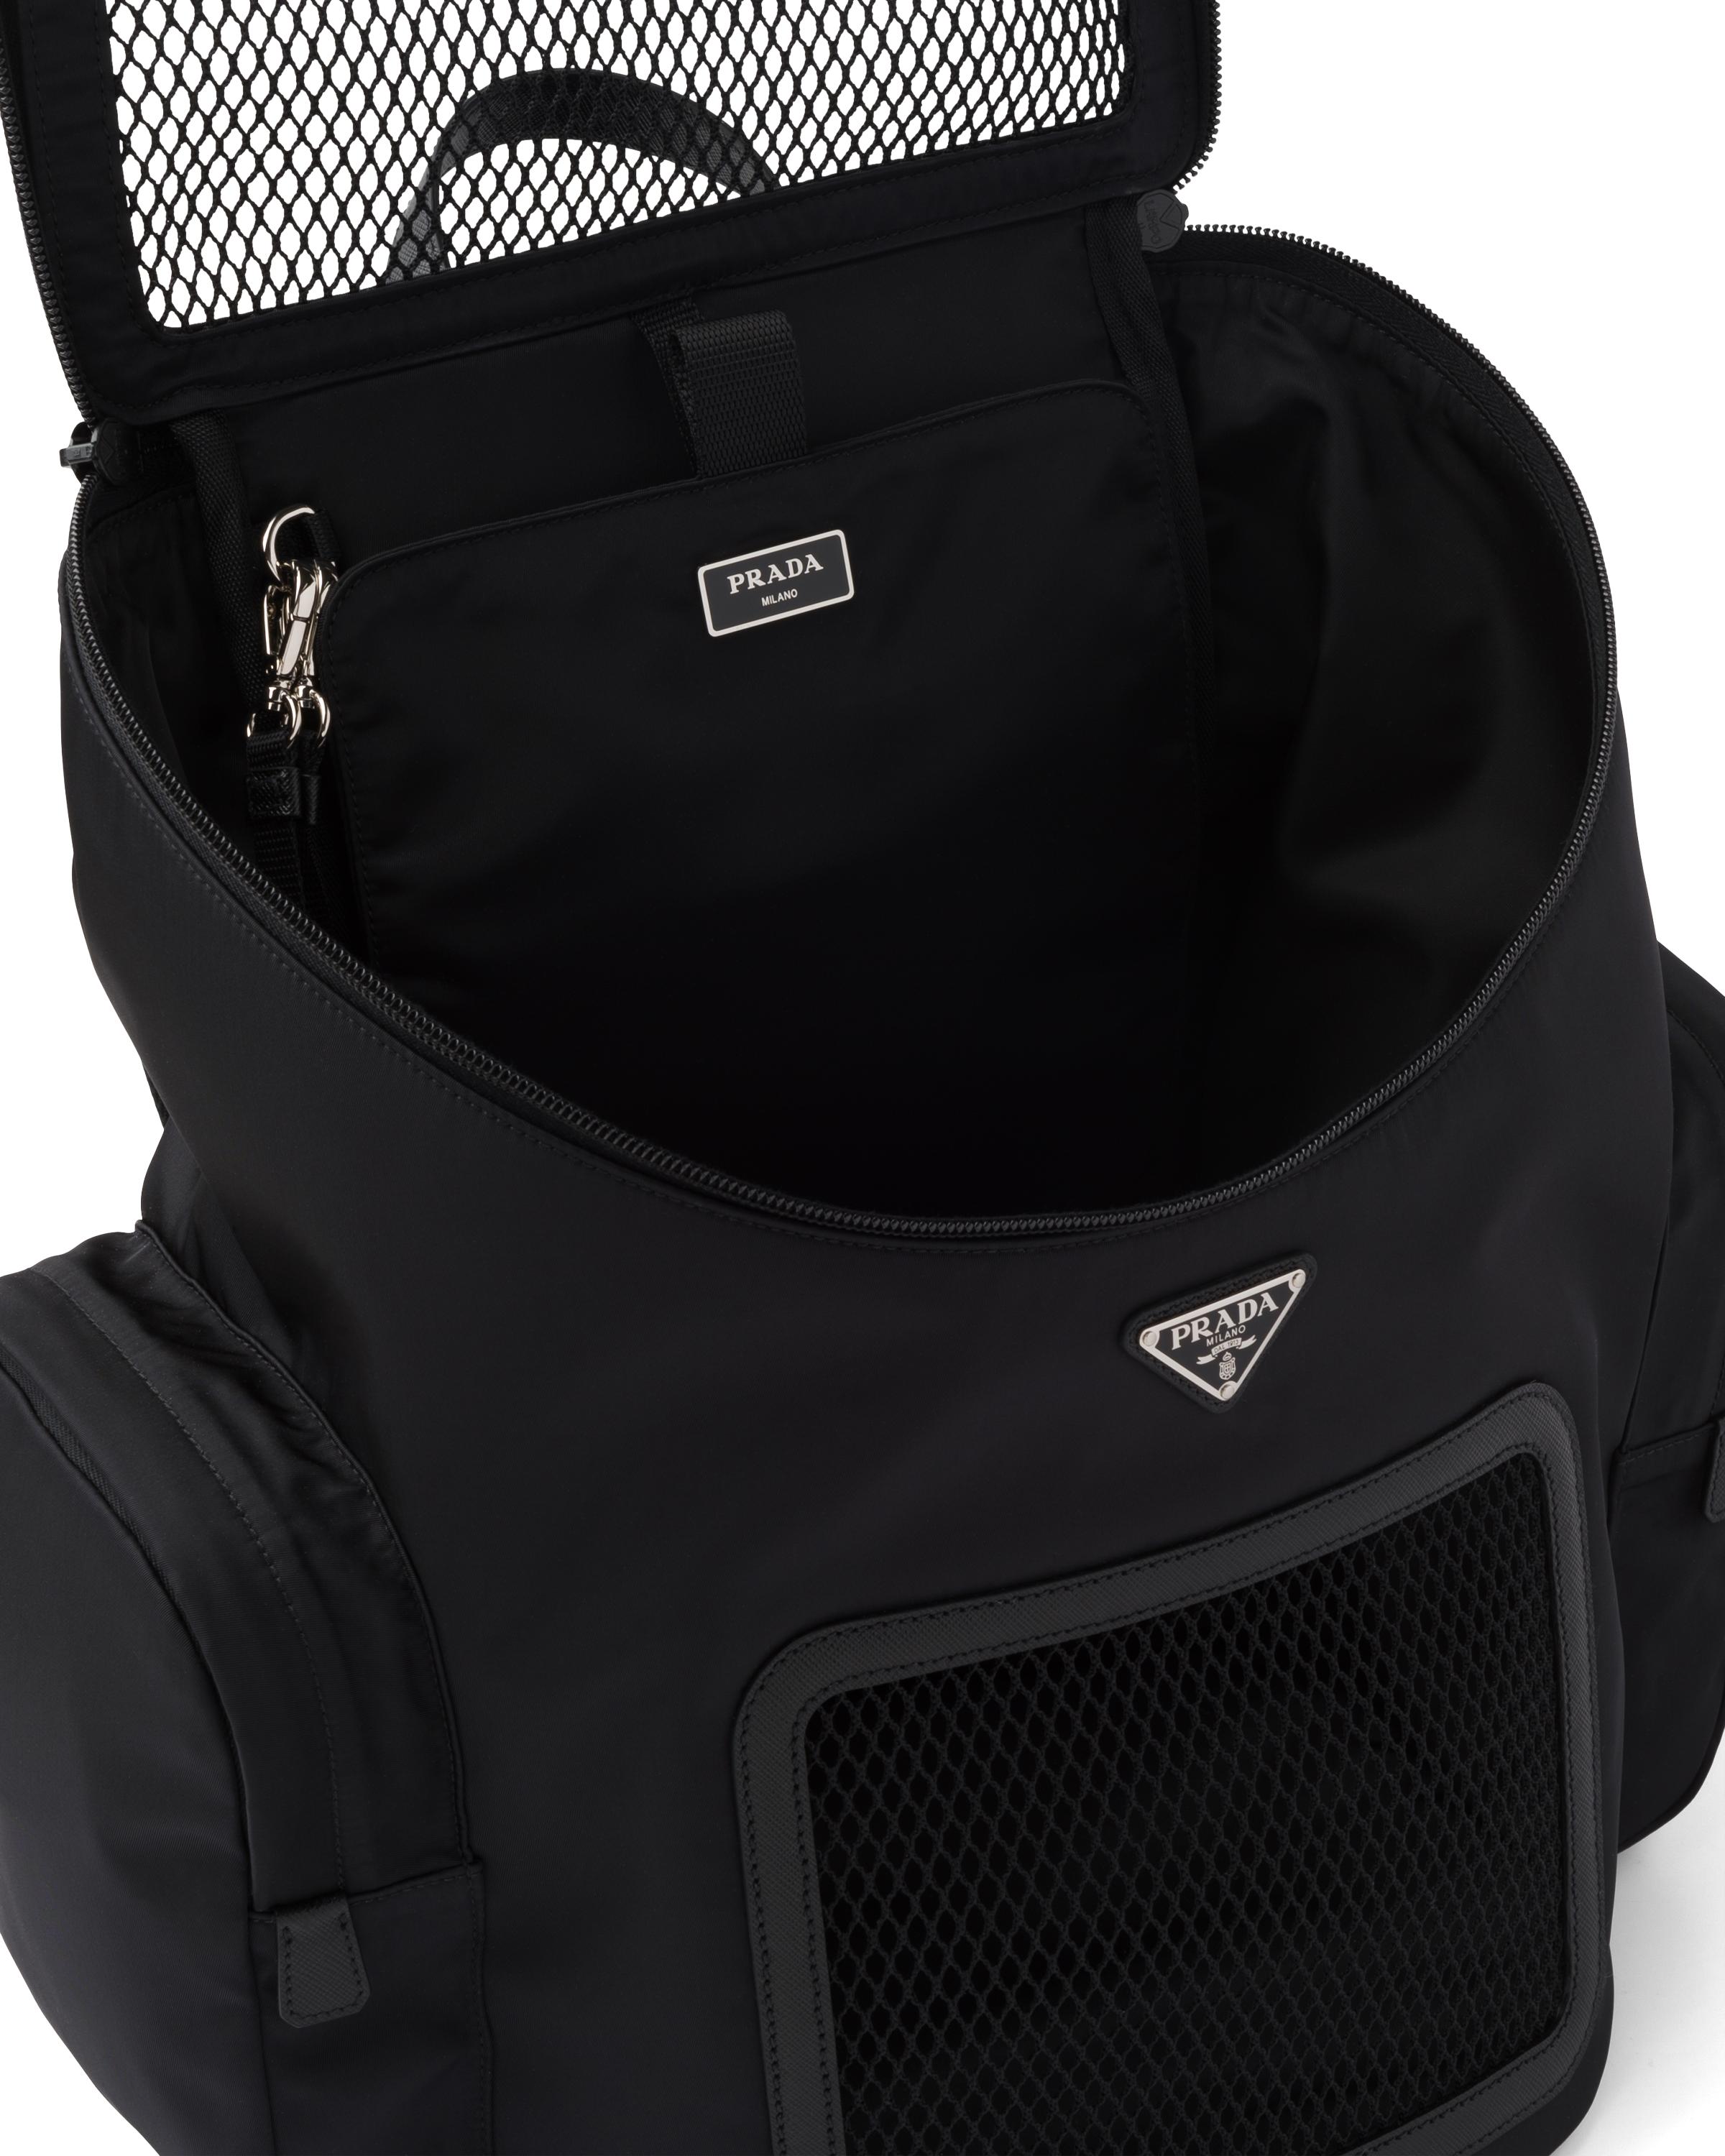 Black Prada Dog Carrier  Dog carrier bag, Dog purse, Dog accessories